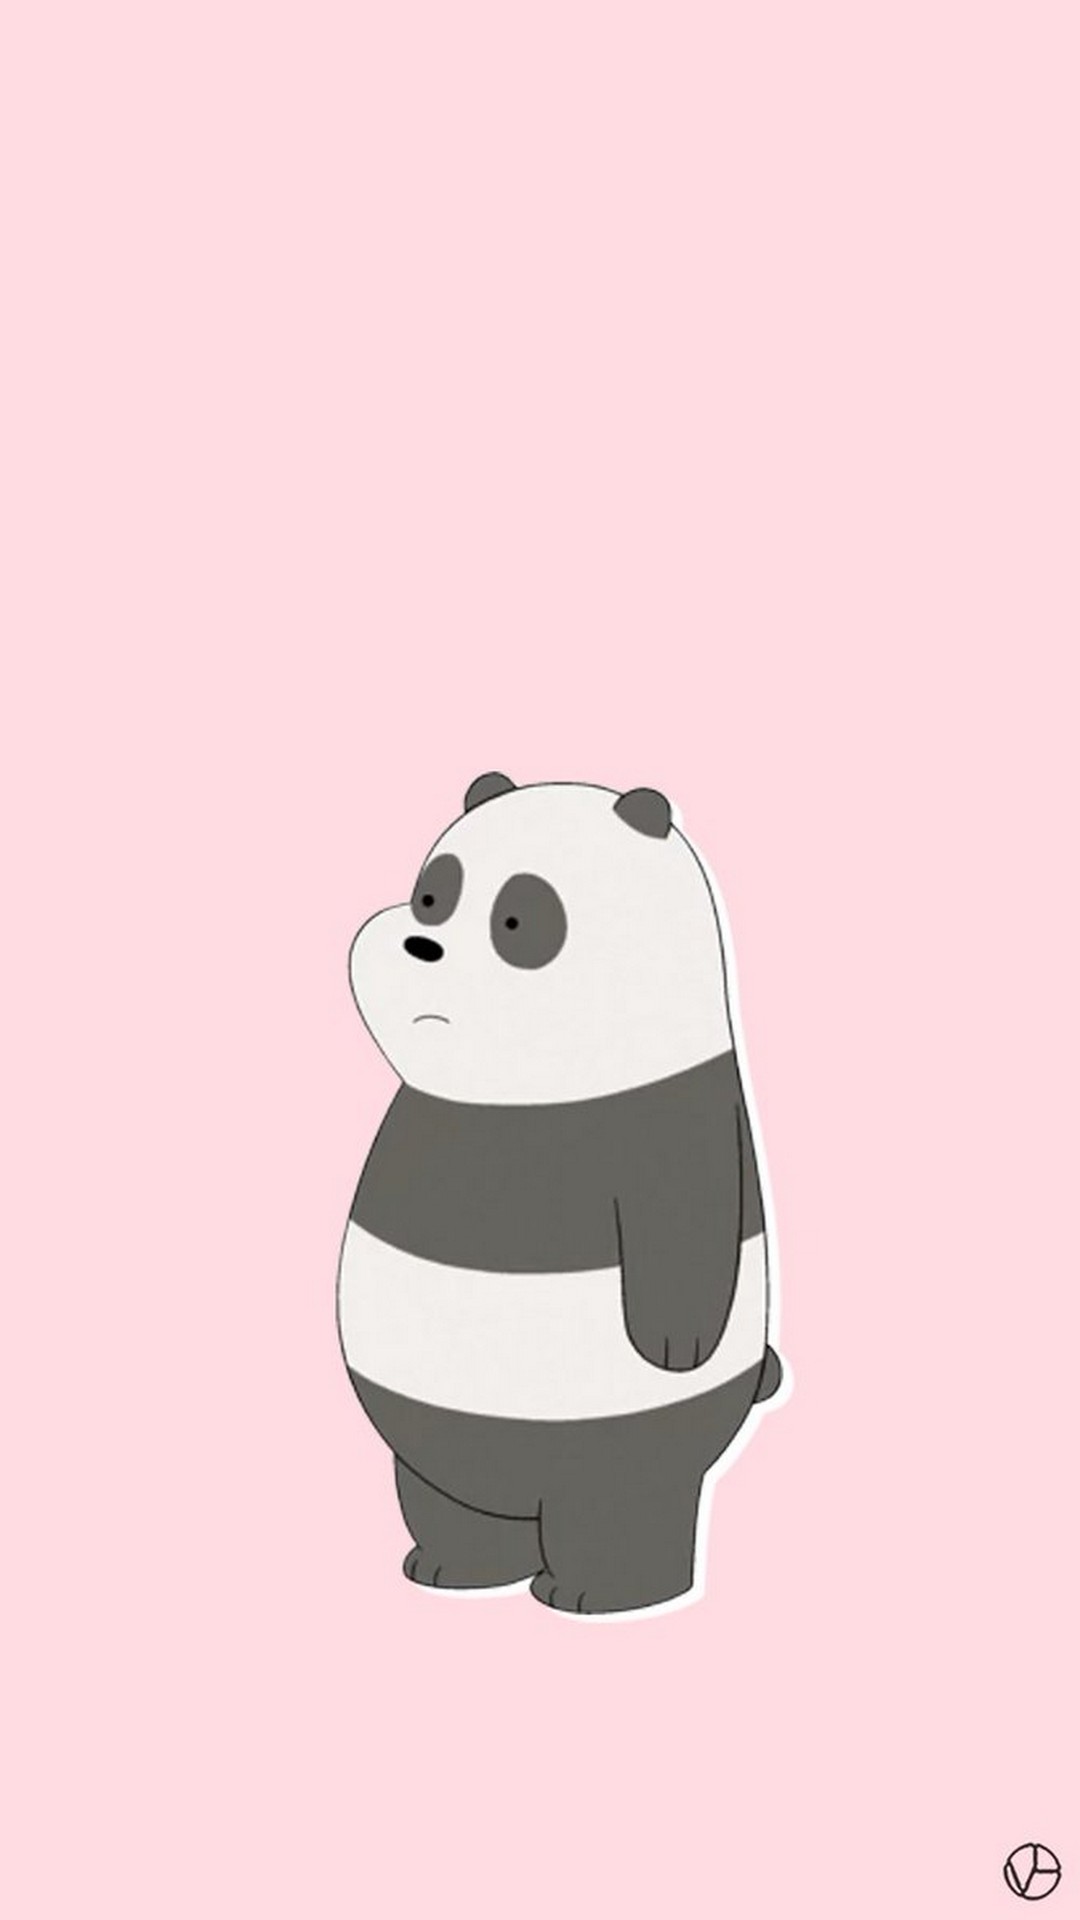 Cute Panda Wallpaper Mobile | 2020 Cute